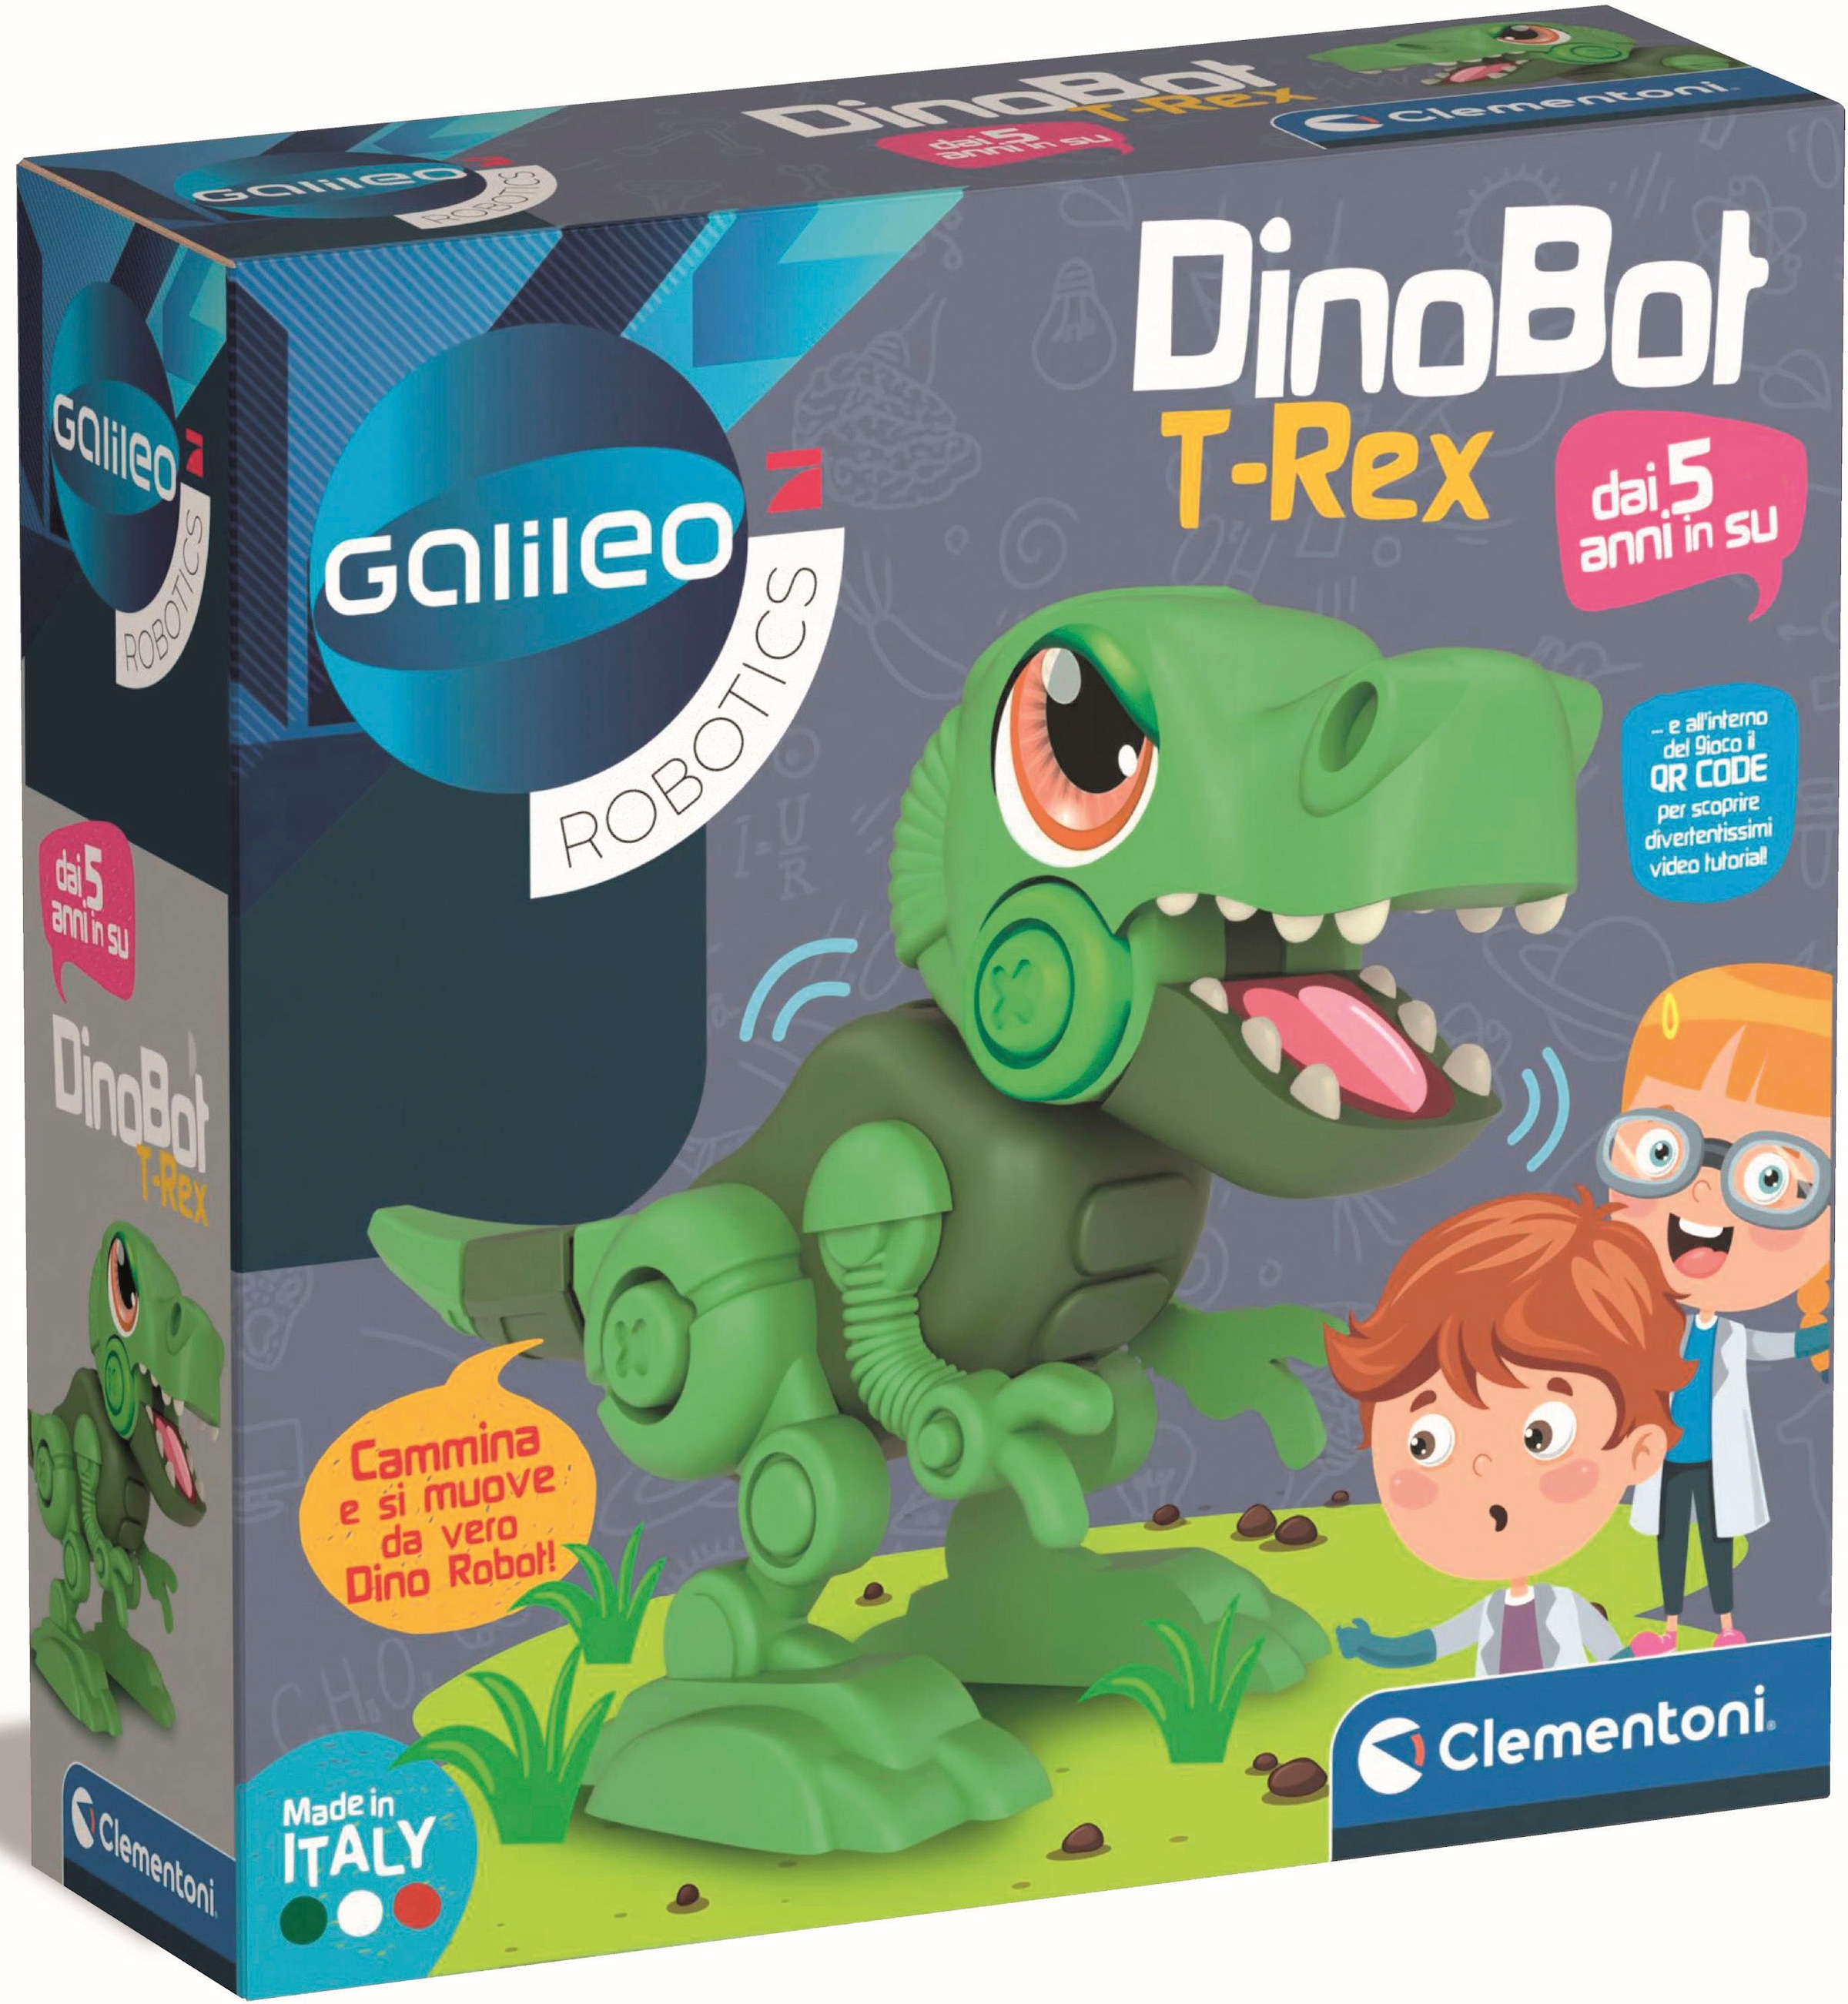 Clementoni® Online Made in Shop im Roboter DinoBot T-Rex«, »Galileo, OTTO Europe